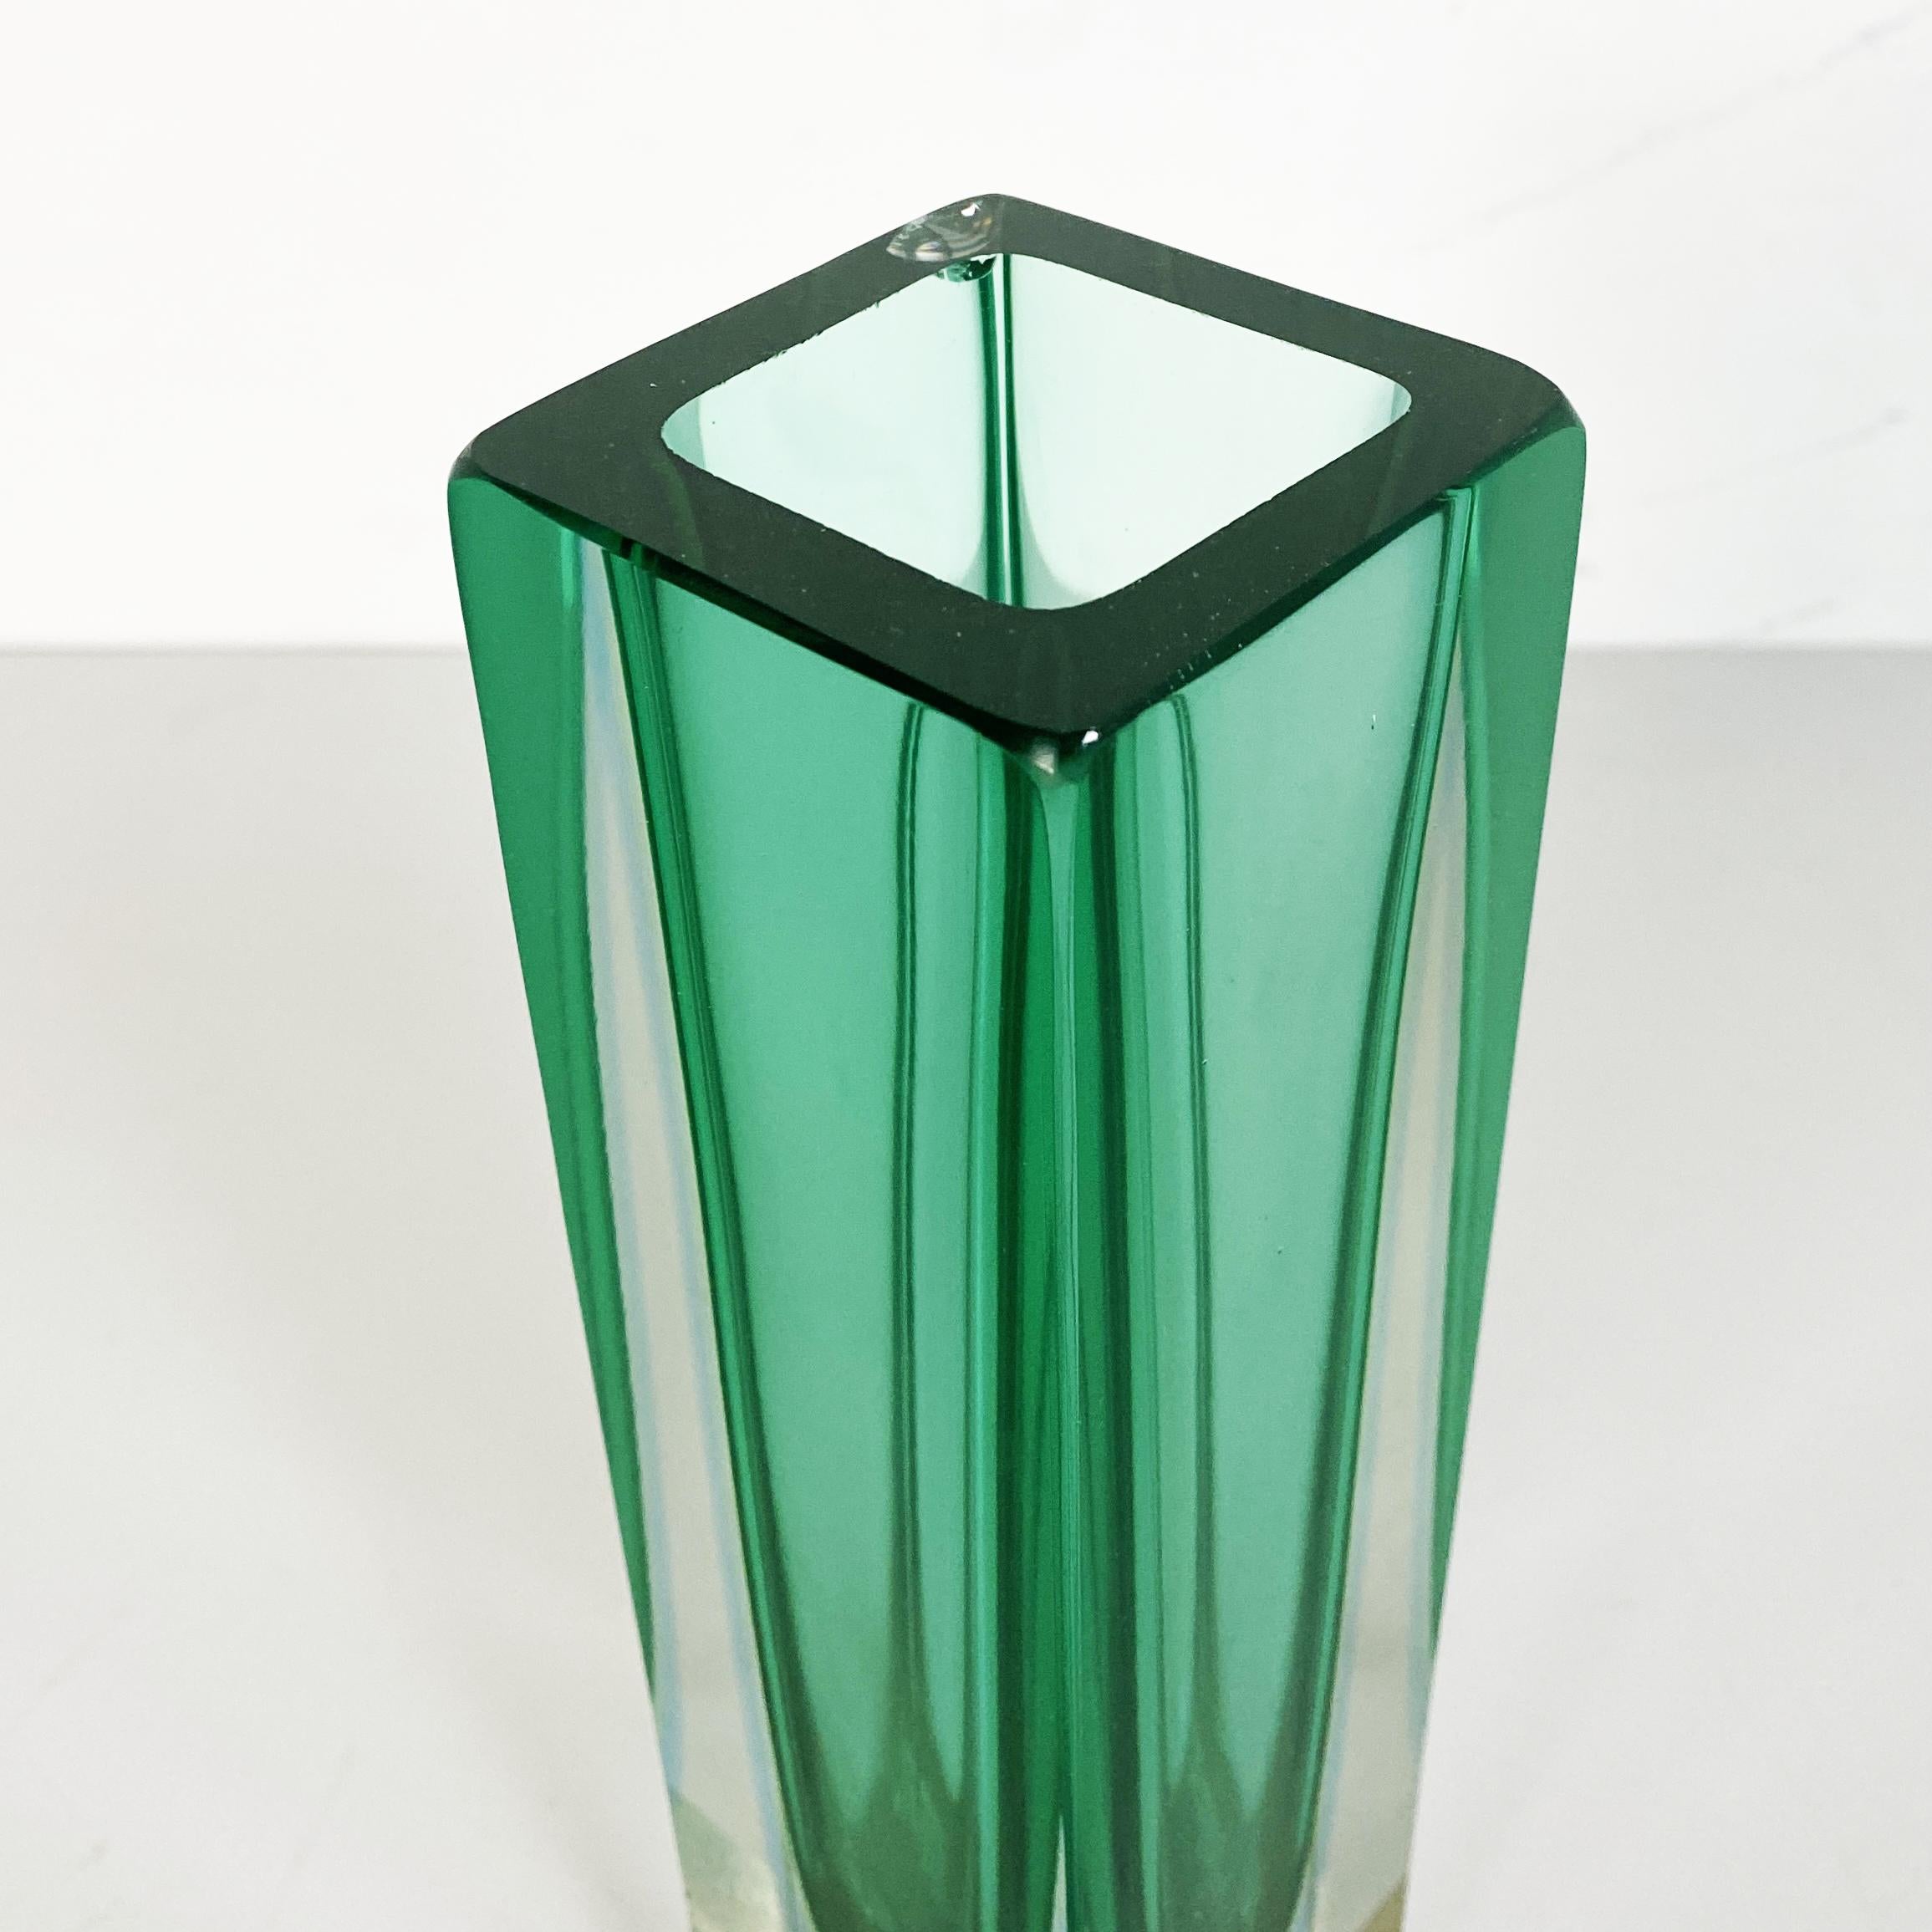 Late 20th Century Italian Mid-Century Green Murano Glass Vase with Internal Blue Shades, 1970s